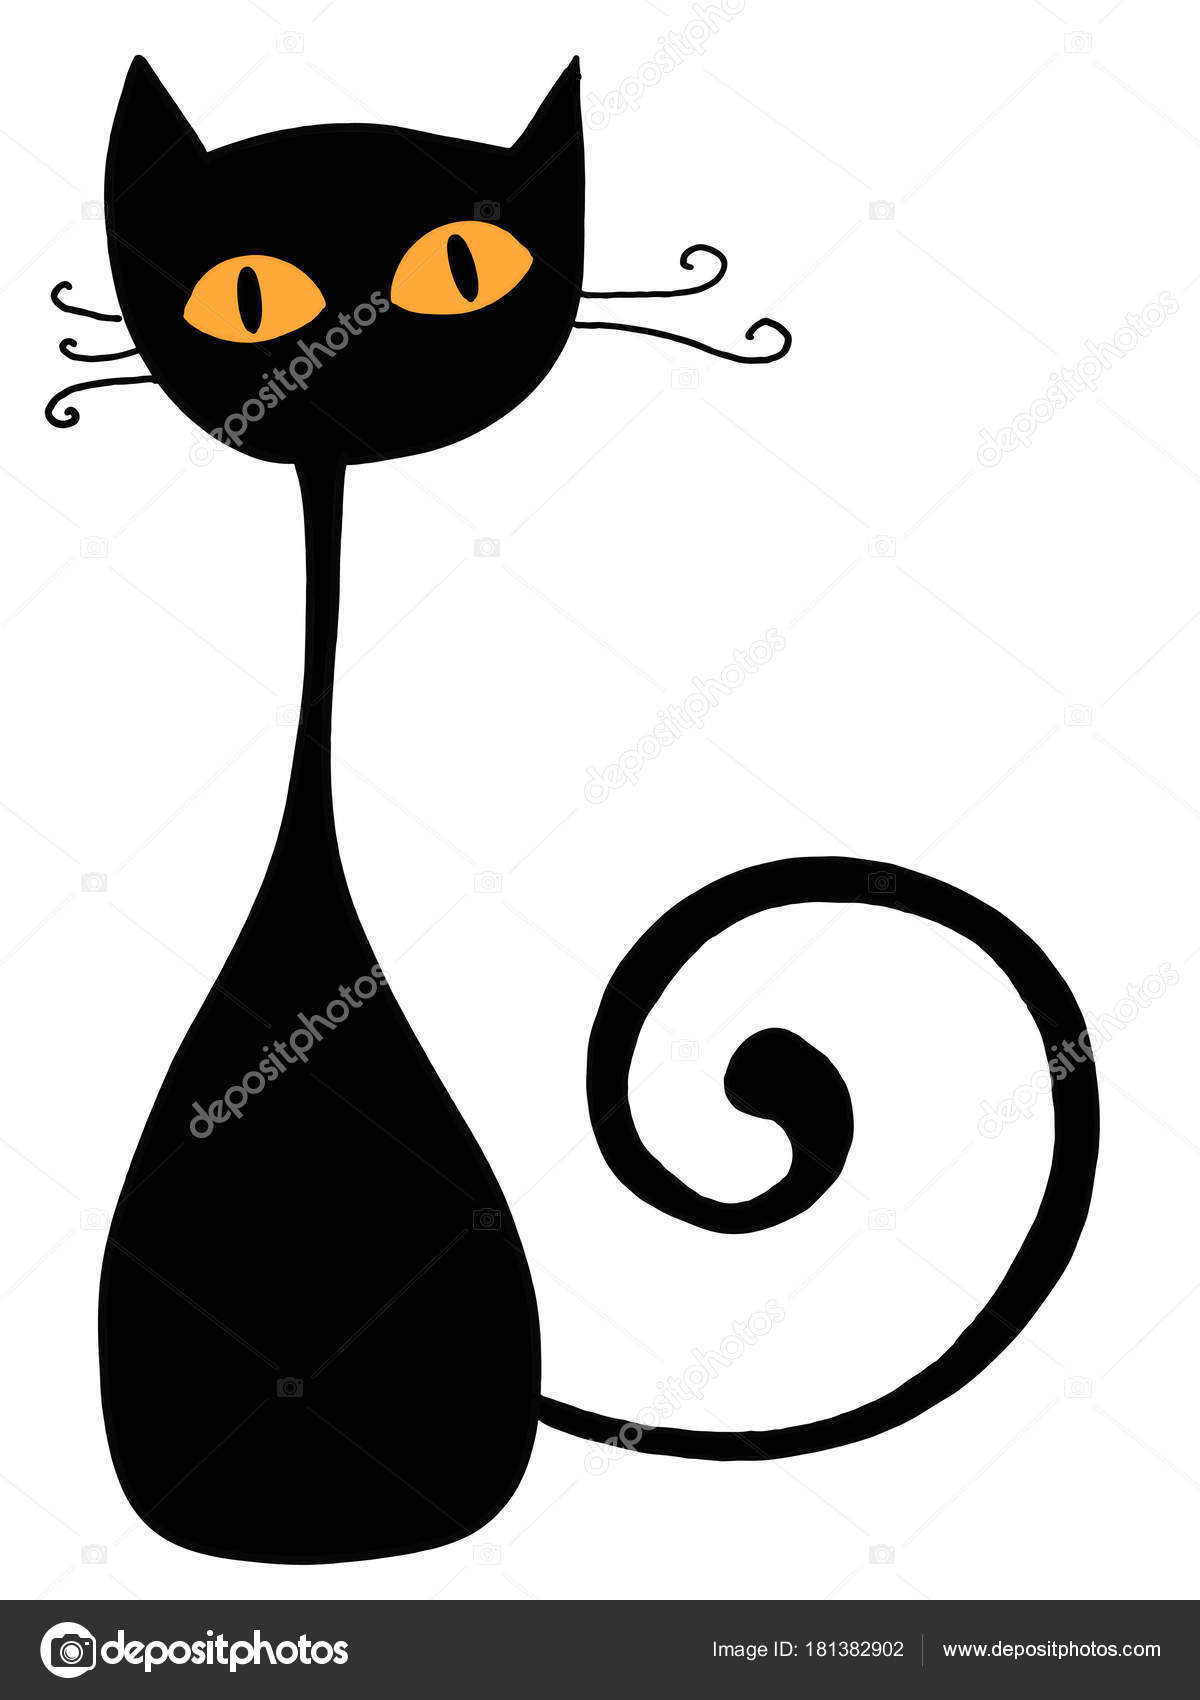 Black Cat Silhouette Drawing Black Cat Silhouette Illustration Drawing Stock Photo C Designartks 181382902